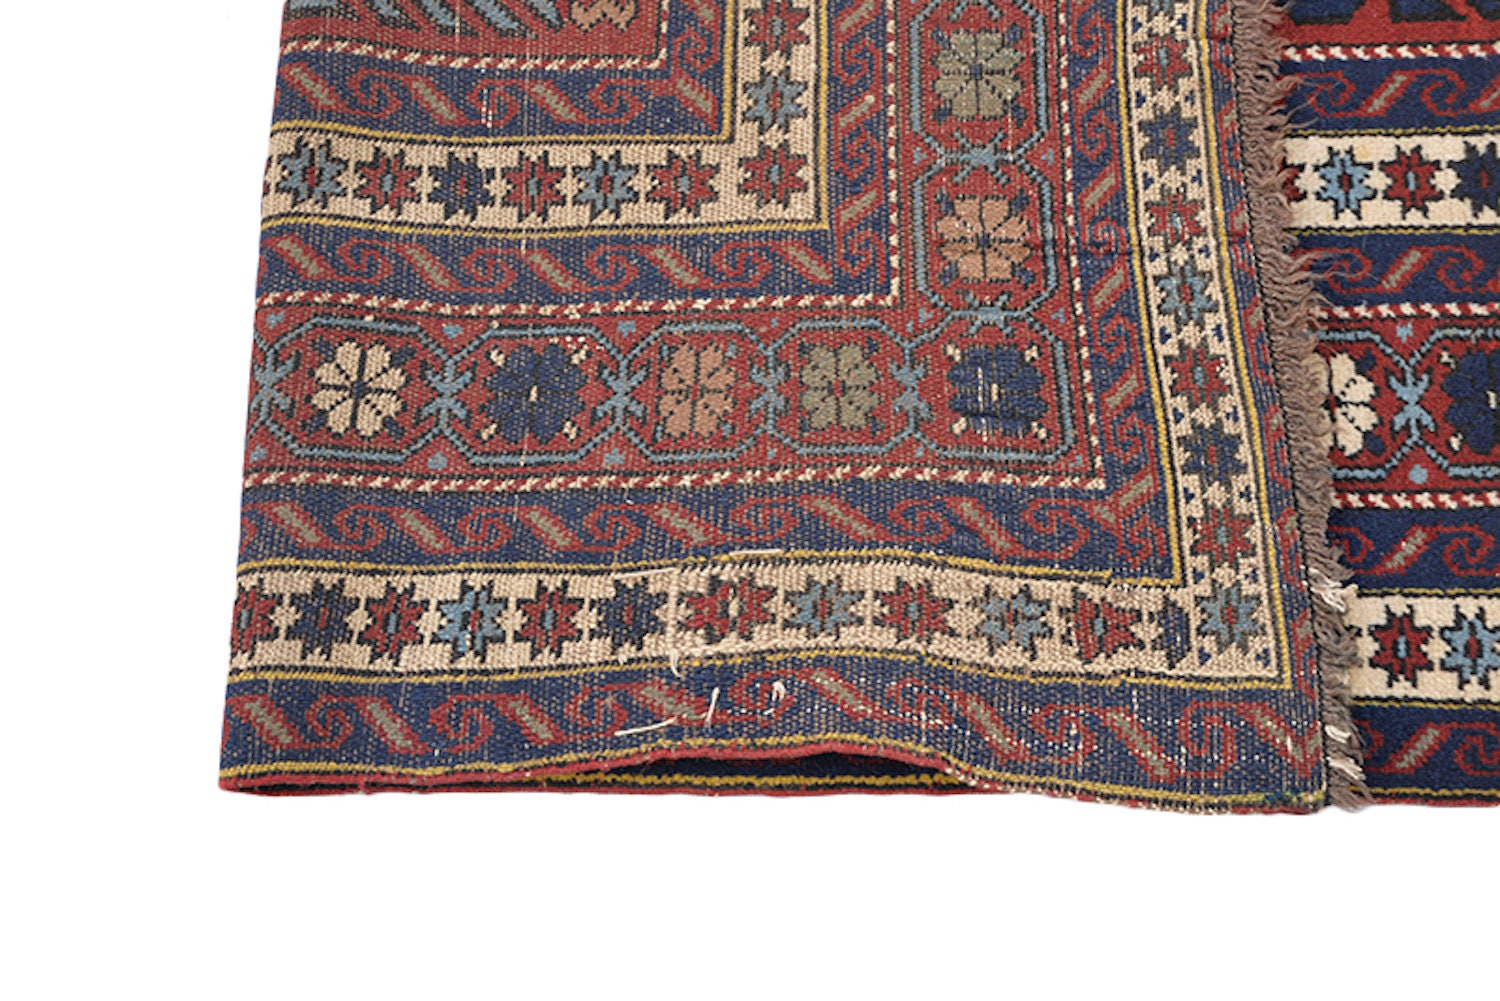 Handmade Red Blue Rug | Kazak Vintage Rug | 4 x 6 Ft | Geometric Tribal Rug | Light Blue Accent | Wool Antique